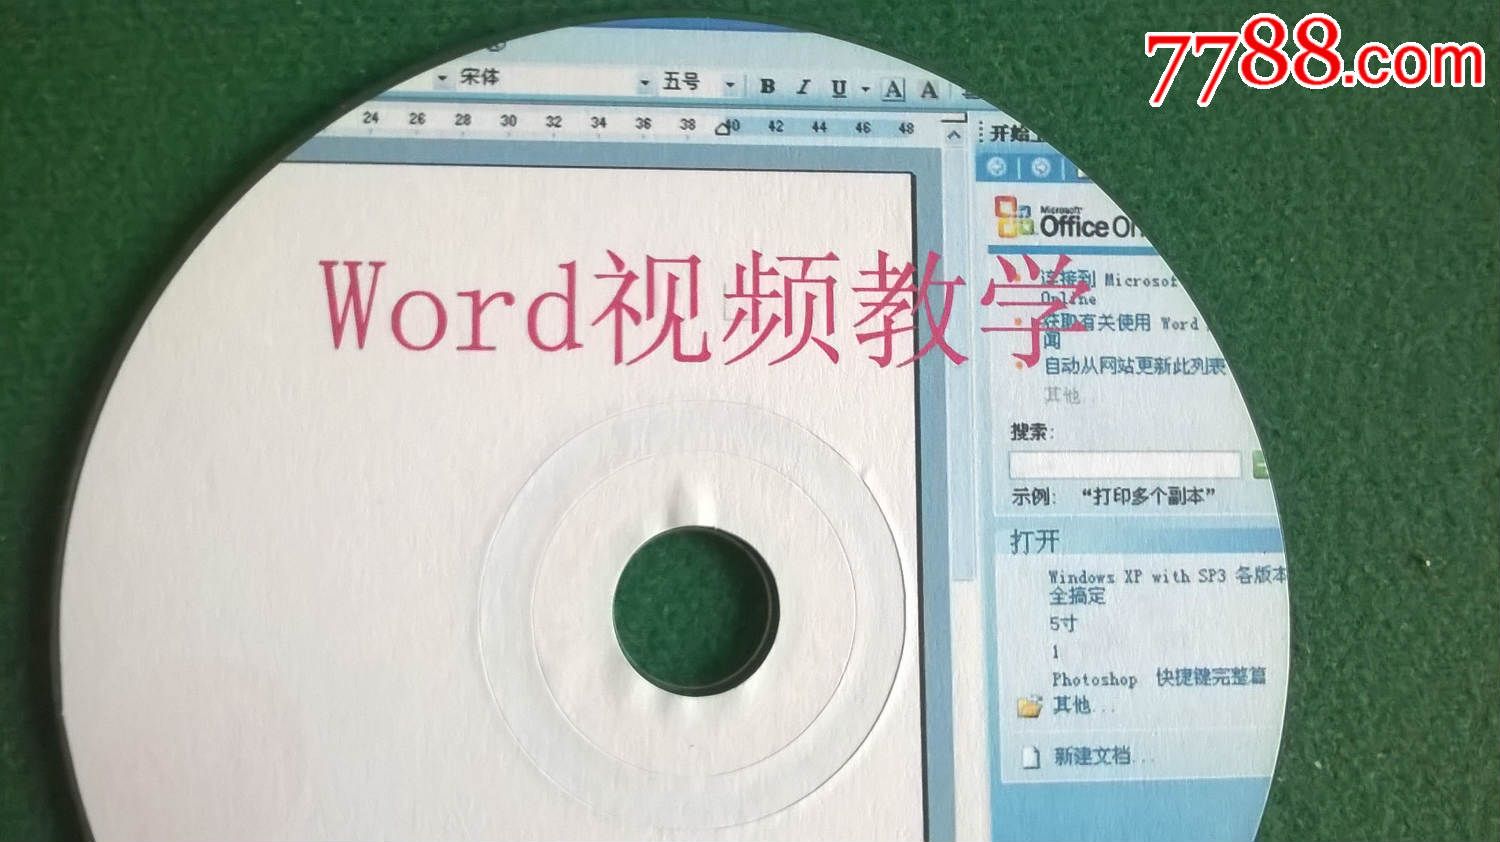 word视频教学光盘-价格:20元-se33954354-电脑